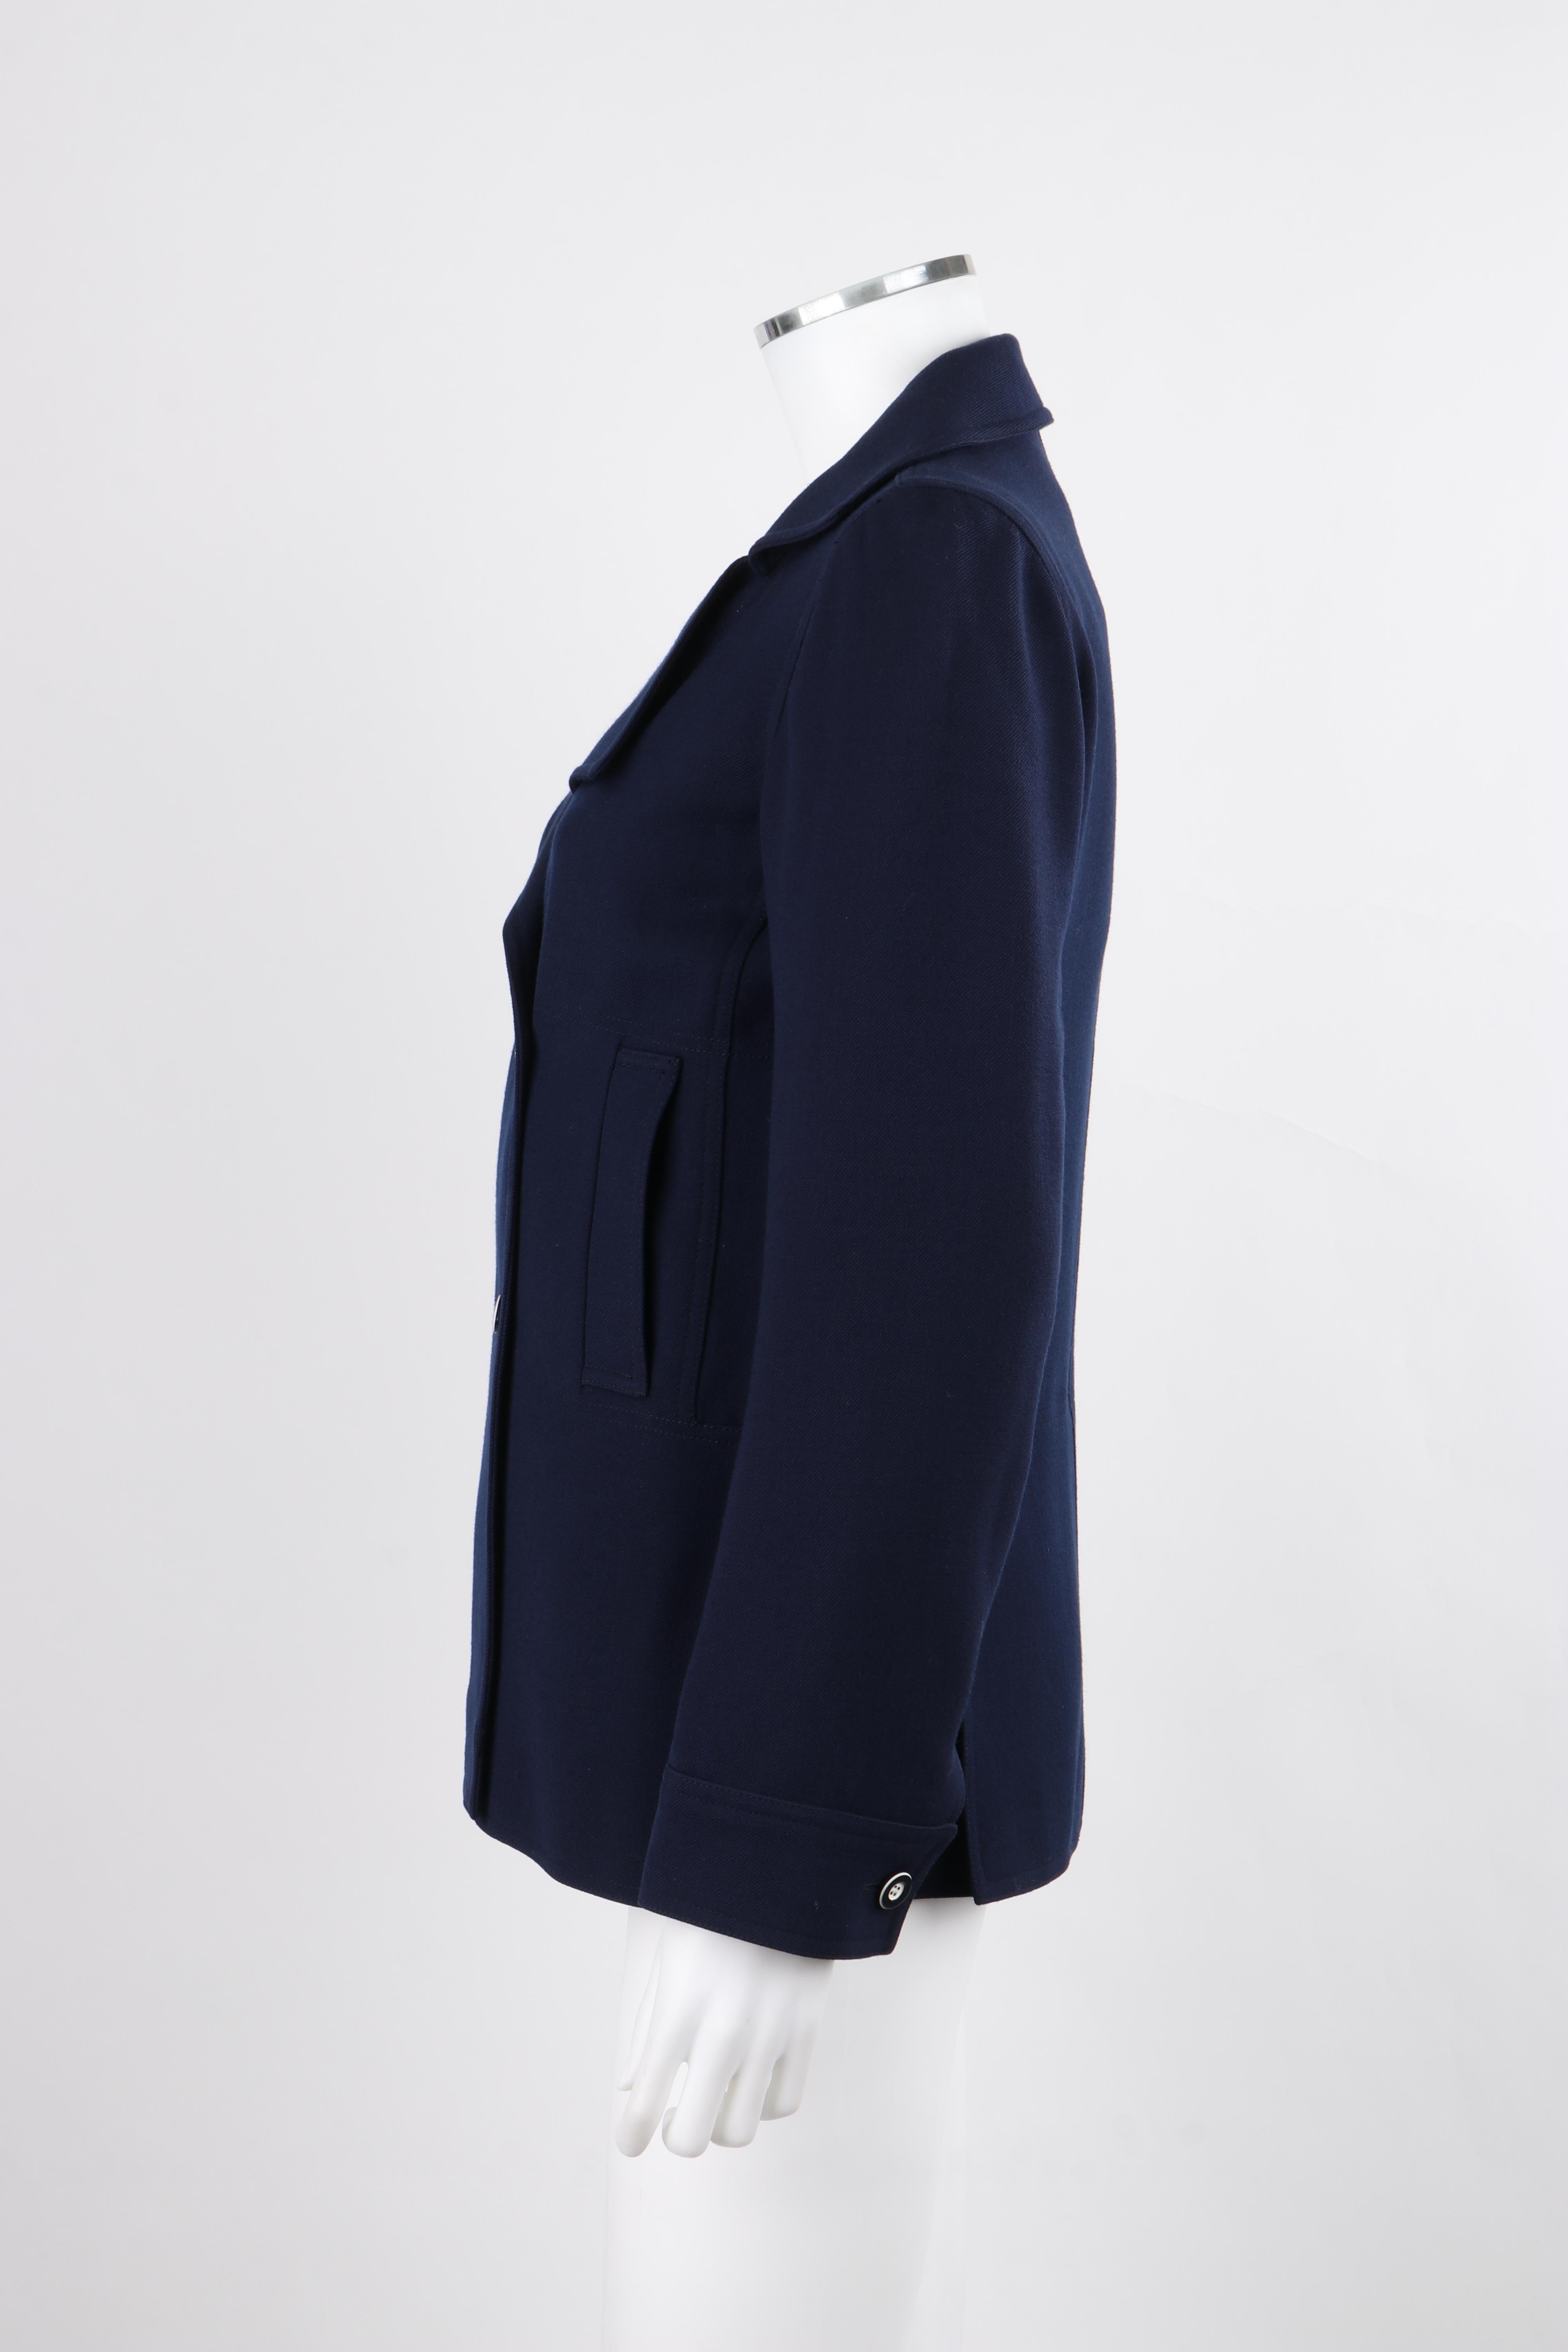 COURREGES PARIS c.1970's Vtg Navy Blue Wool Double Breasted Blazer Jacket  For Sale 2